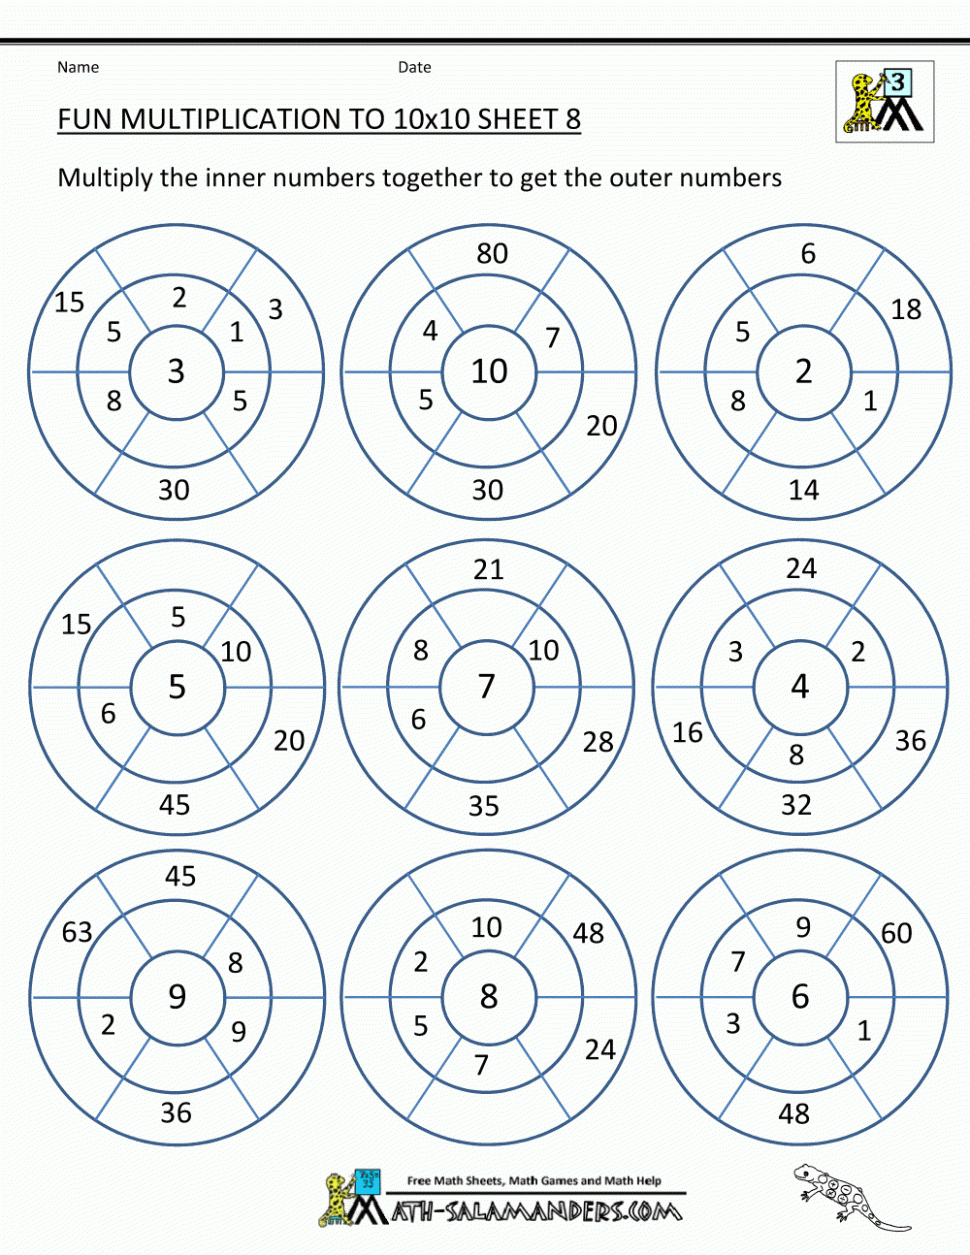 Multiplication Facts Worksheets Understanding Multiplication To 10X10 Multiplication